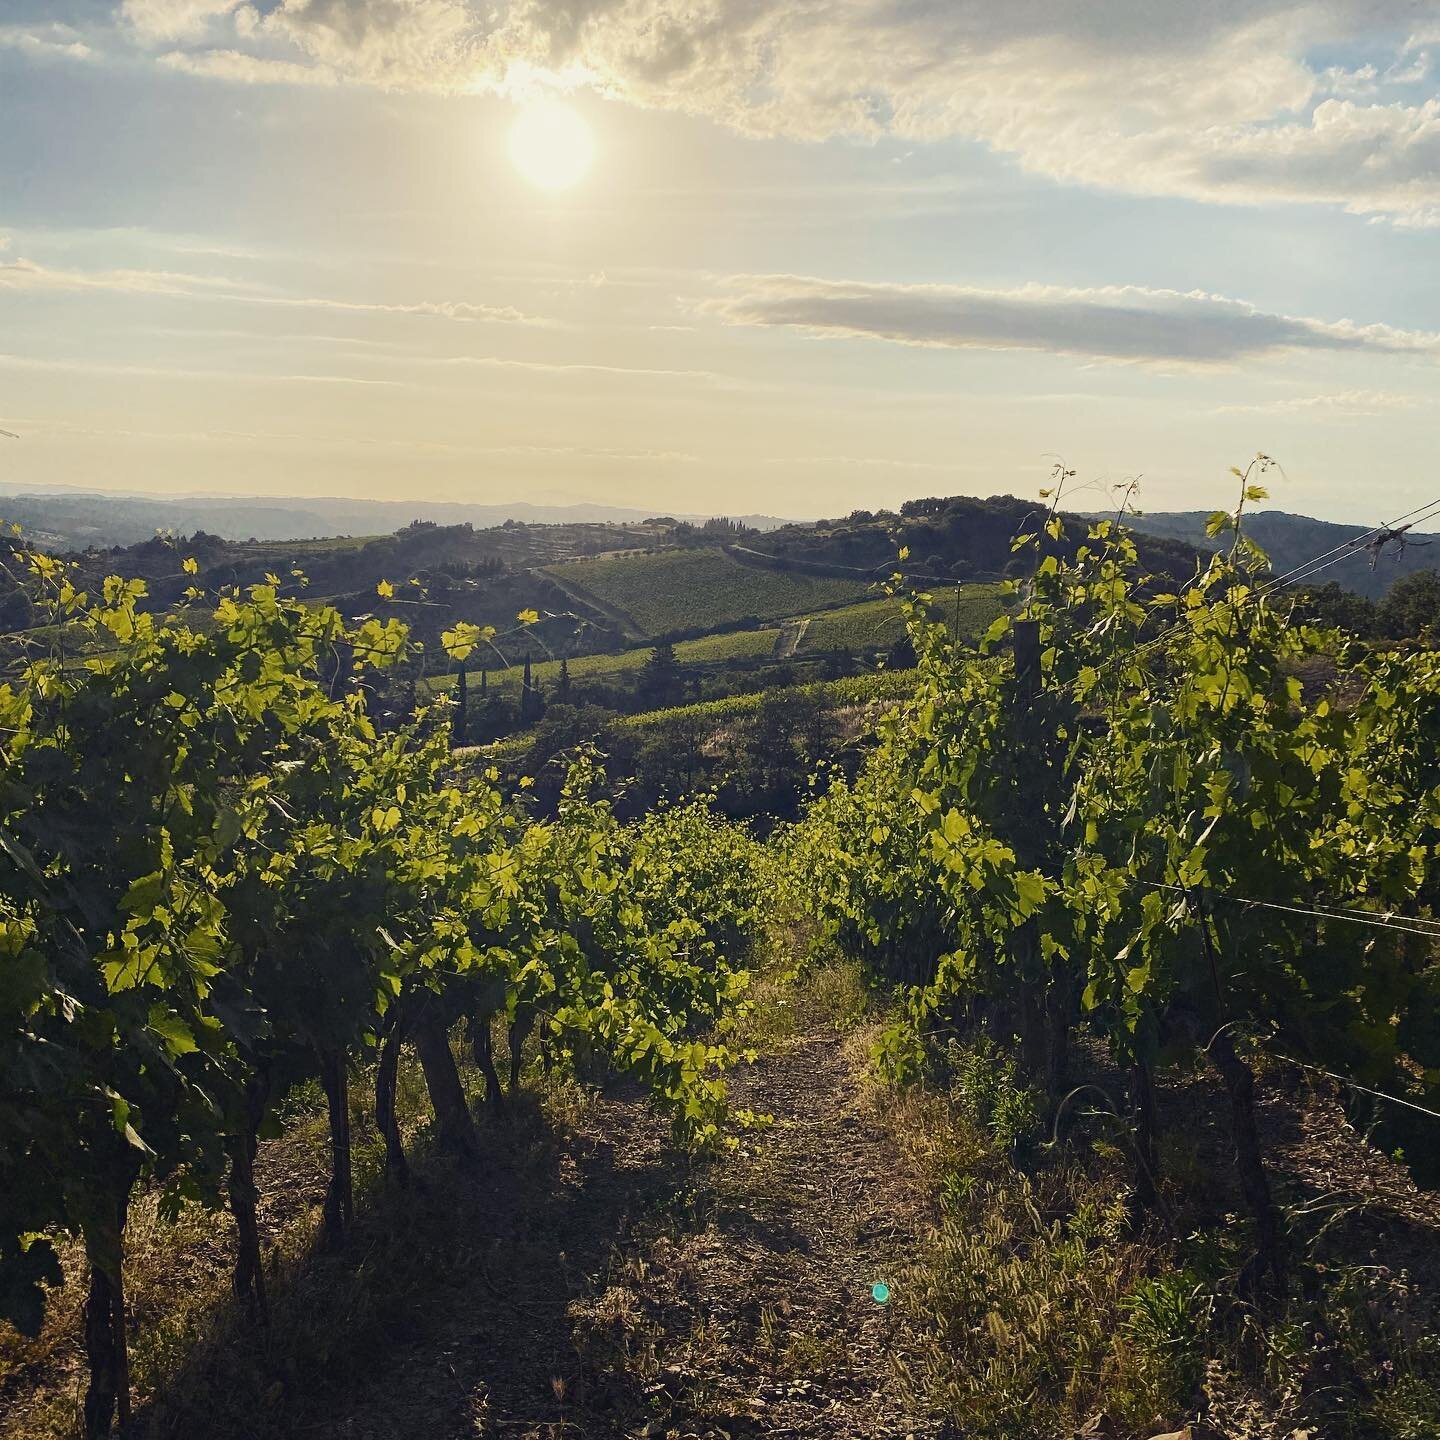 View of the vines 🍇🍇
Grapes are growing 
&bull;
&bull;
&bull;
&bull;
#chianticlassico #danishwinery #tuscanywine #toscanawine #redwine #alma #lafesteggiata #lafesteggiatalife #instawine #winery #ilovewine #winelover #passionpassport #winetravel #it